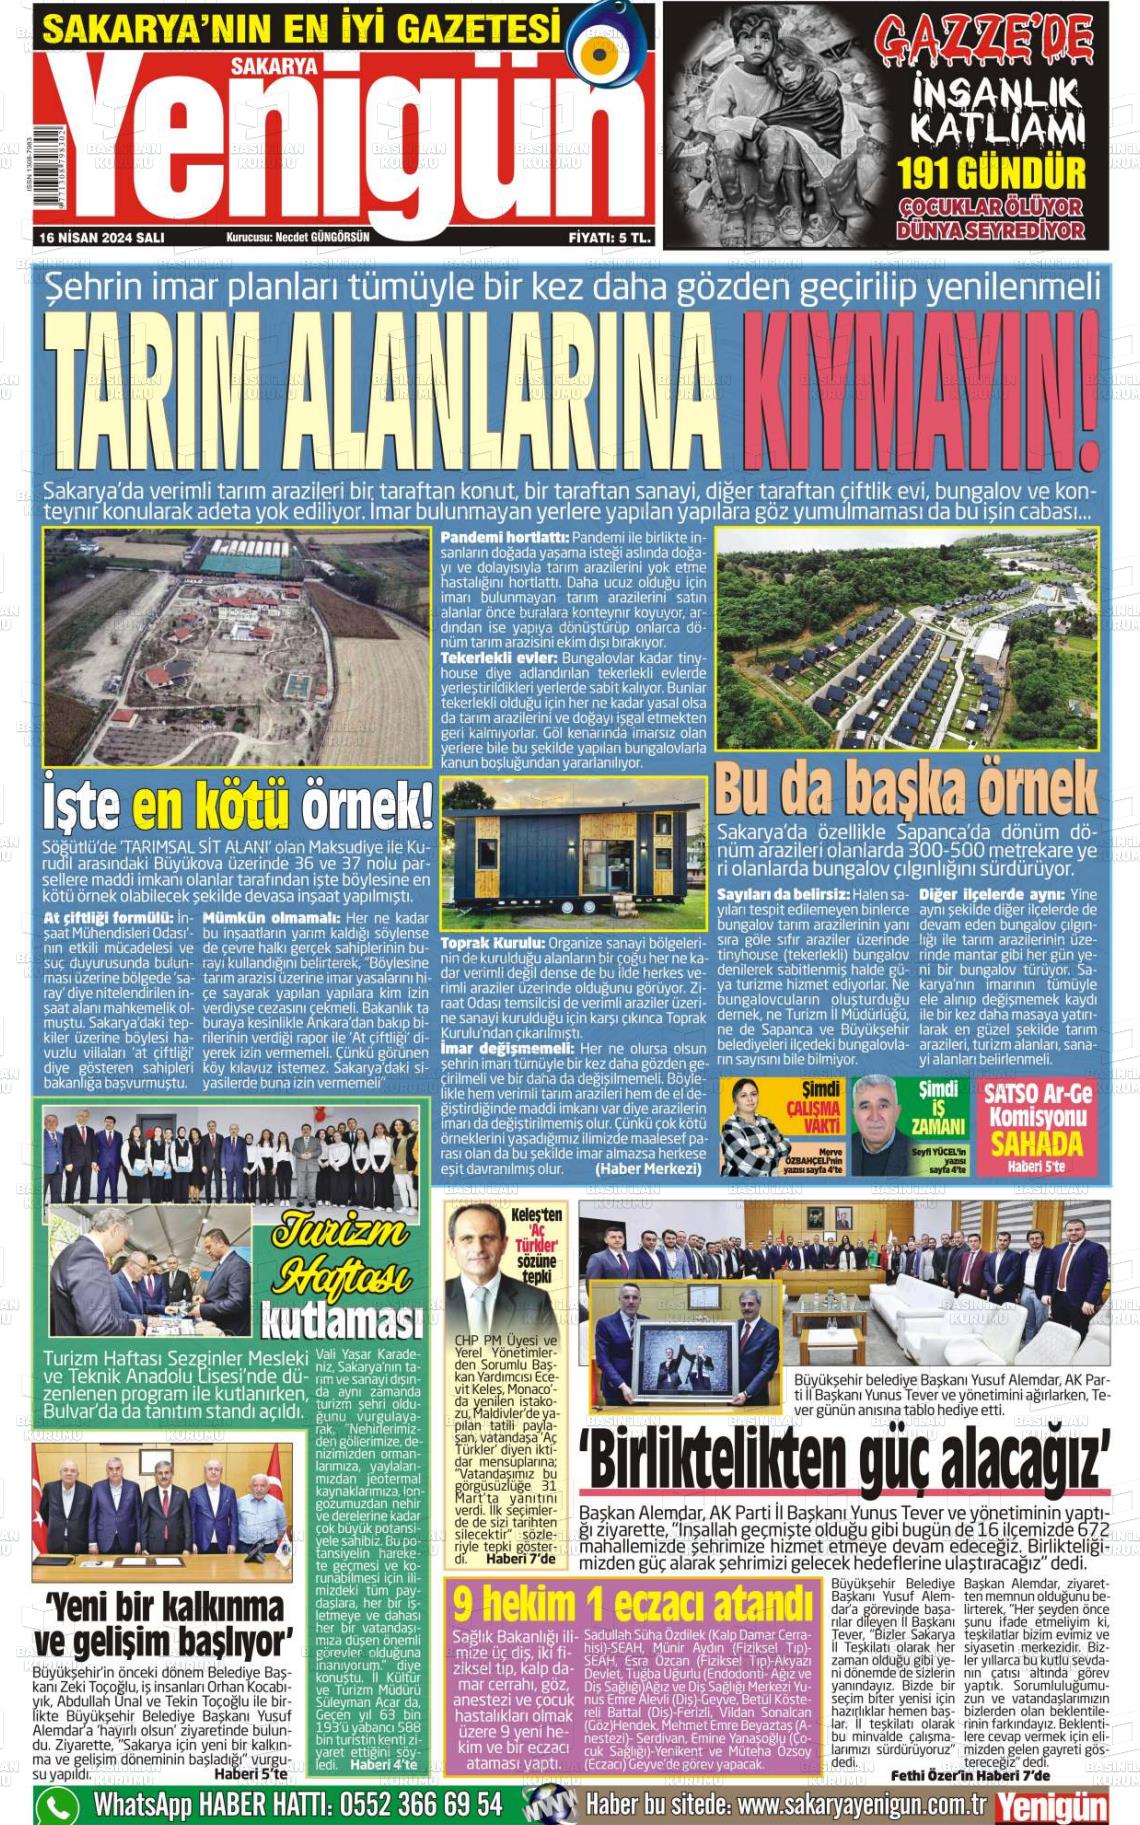 18 Nisan 2024 Sakarya Yenigün Gazete Manşeti